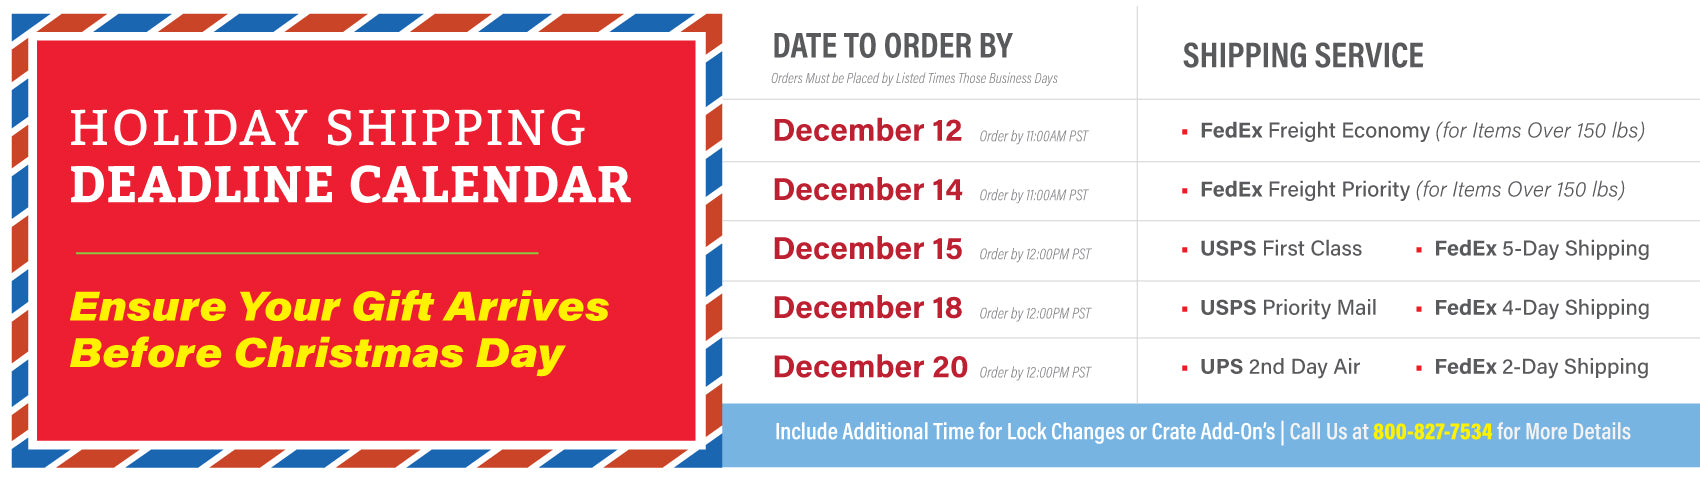 Dean Safe Holiday Shipping Deadline Schedule